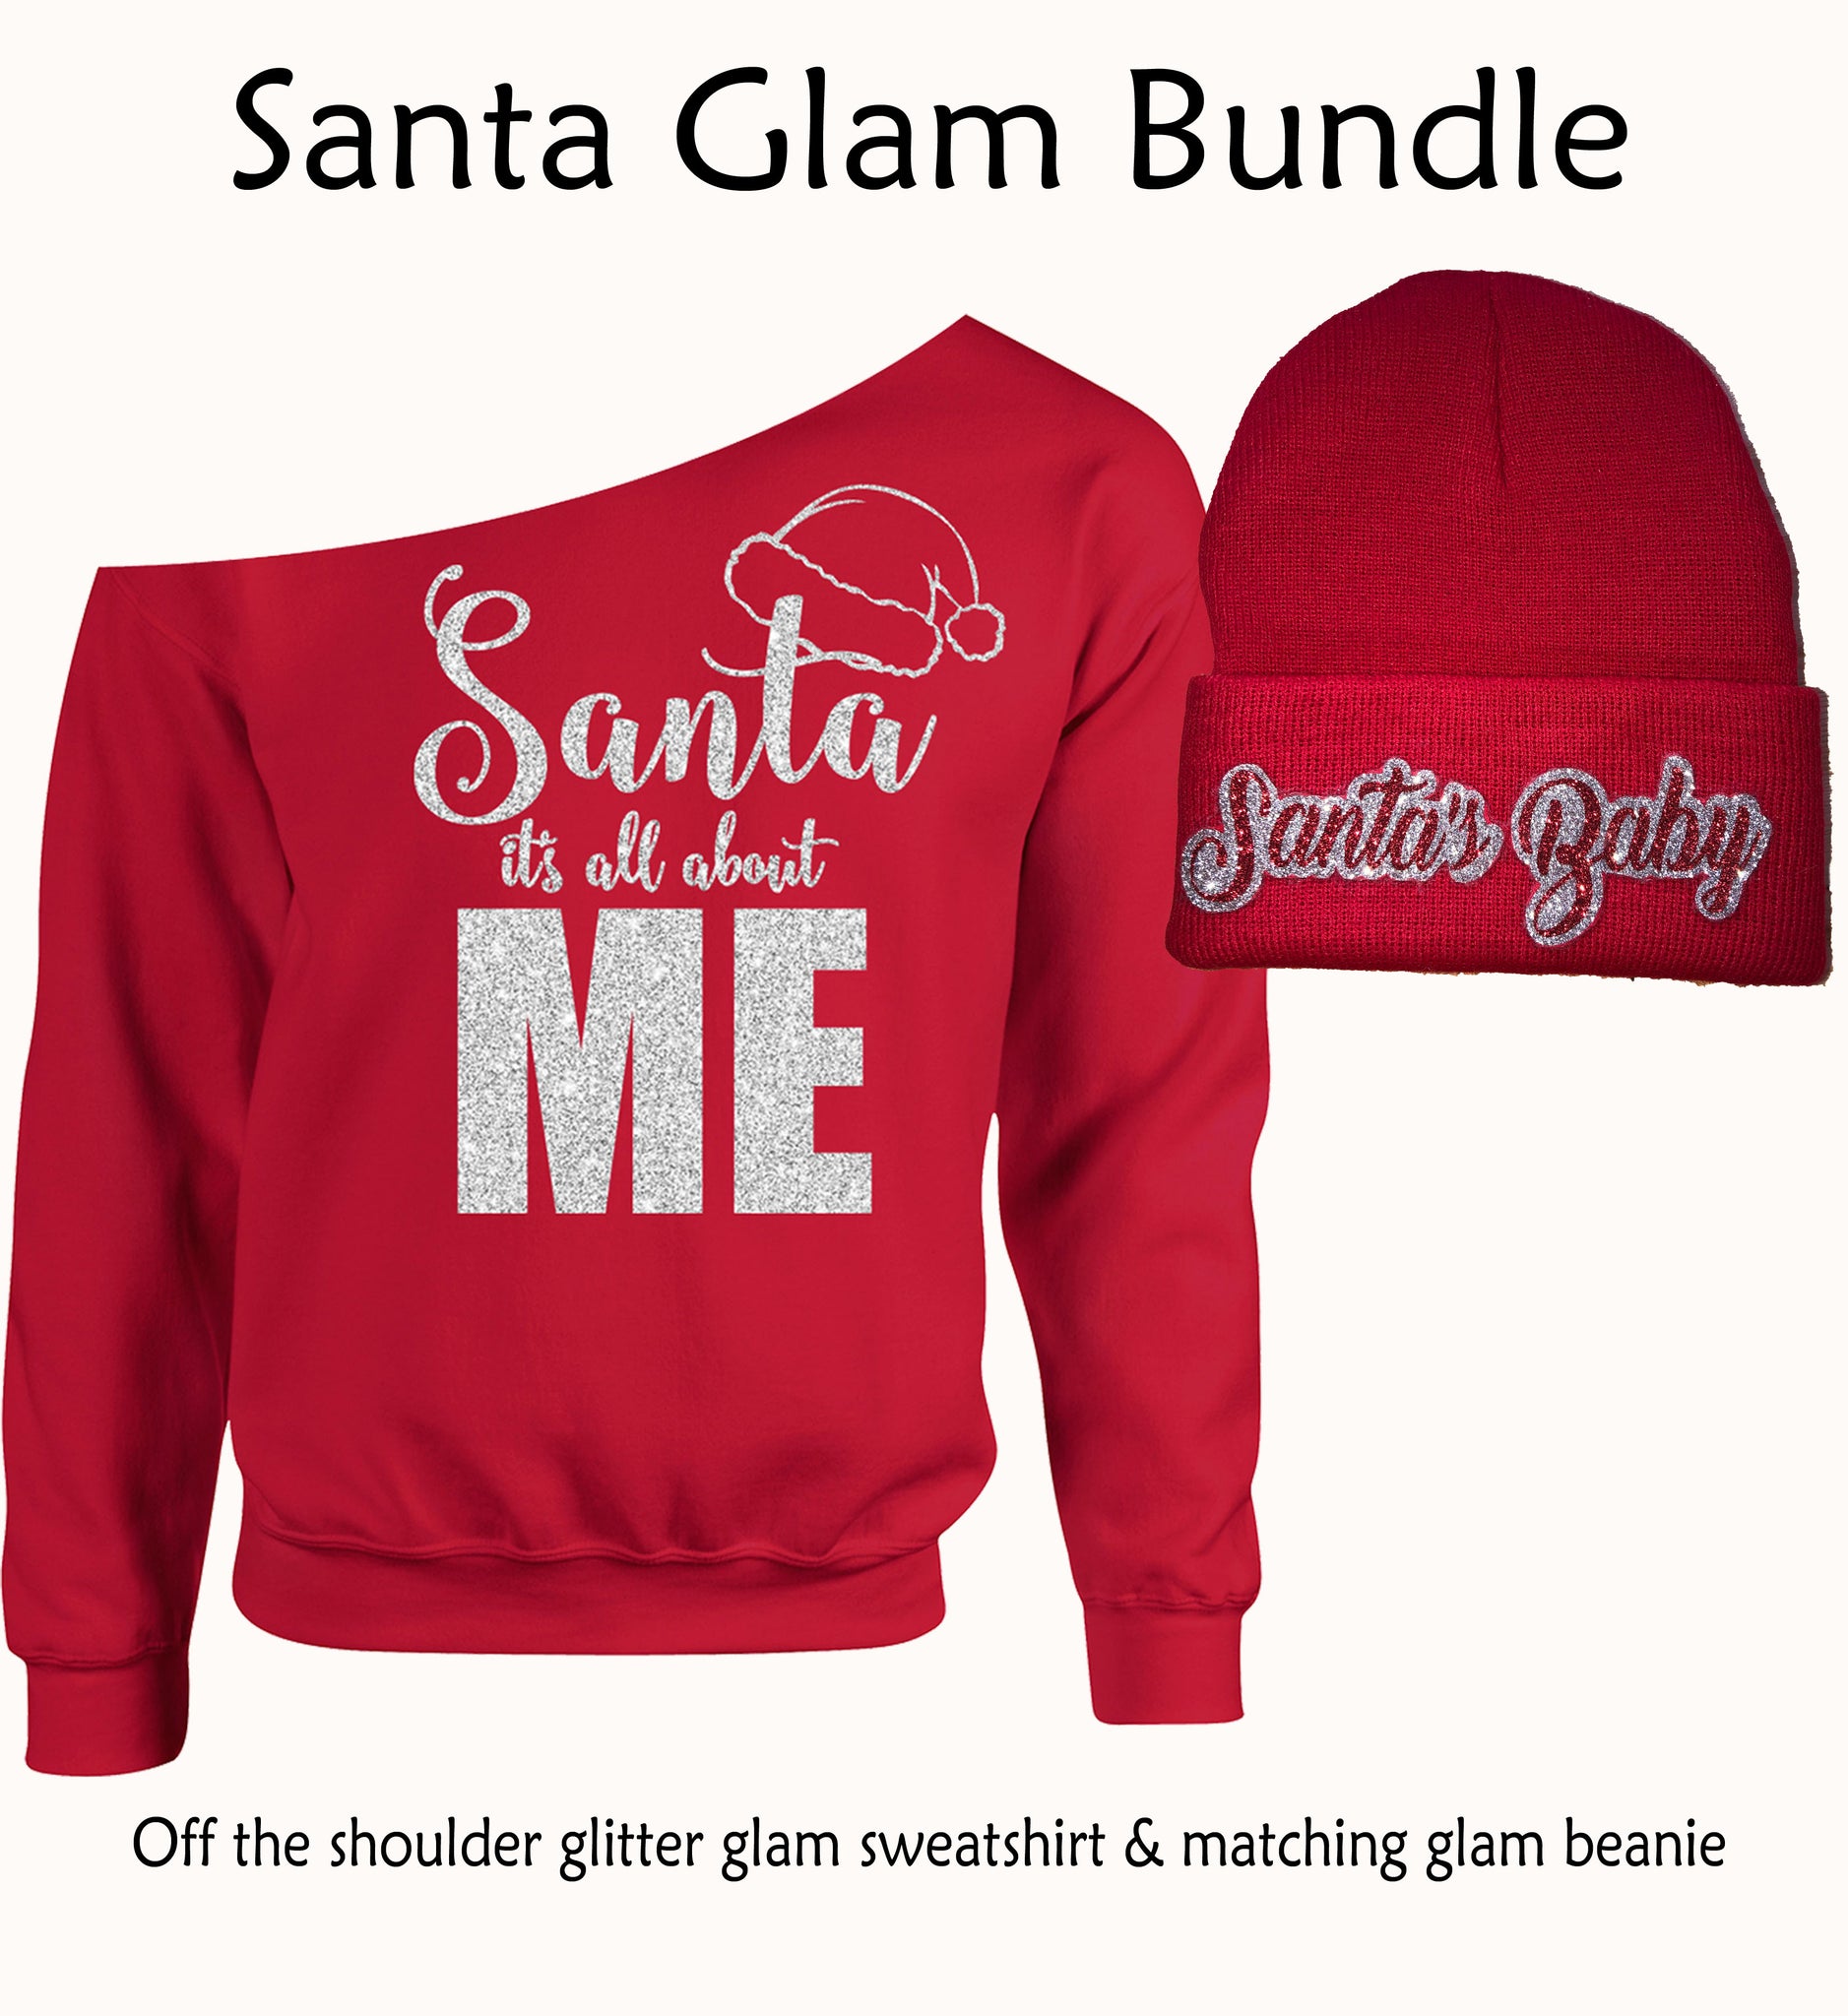 Santa glitter sweatshirt for Christmas holiday cheer. 